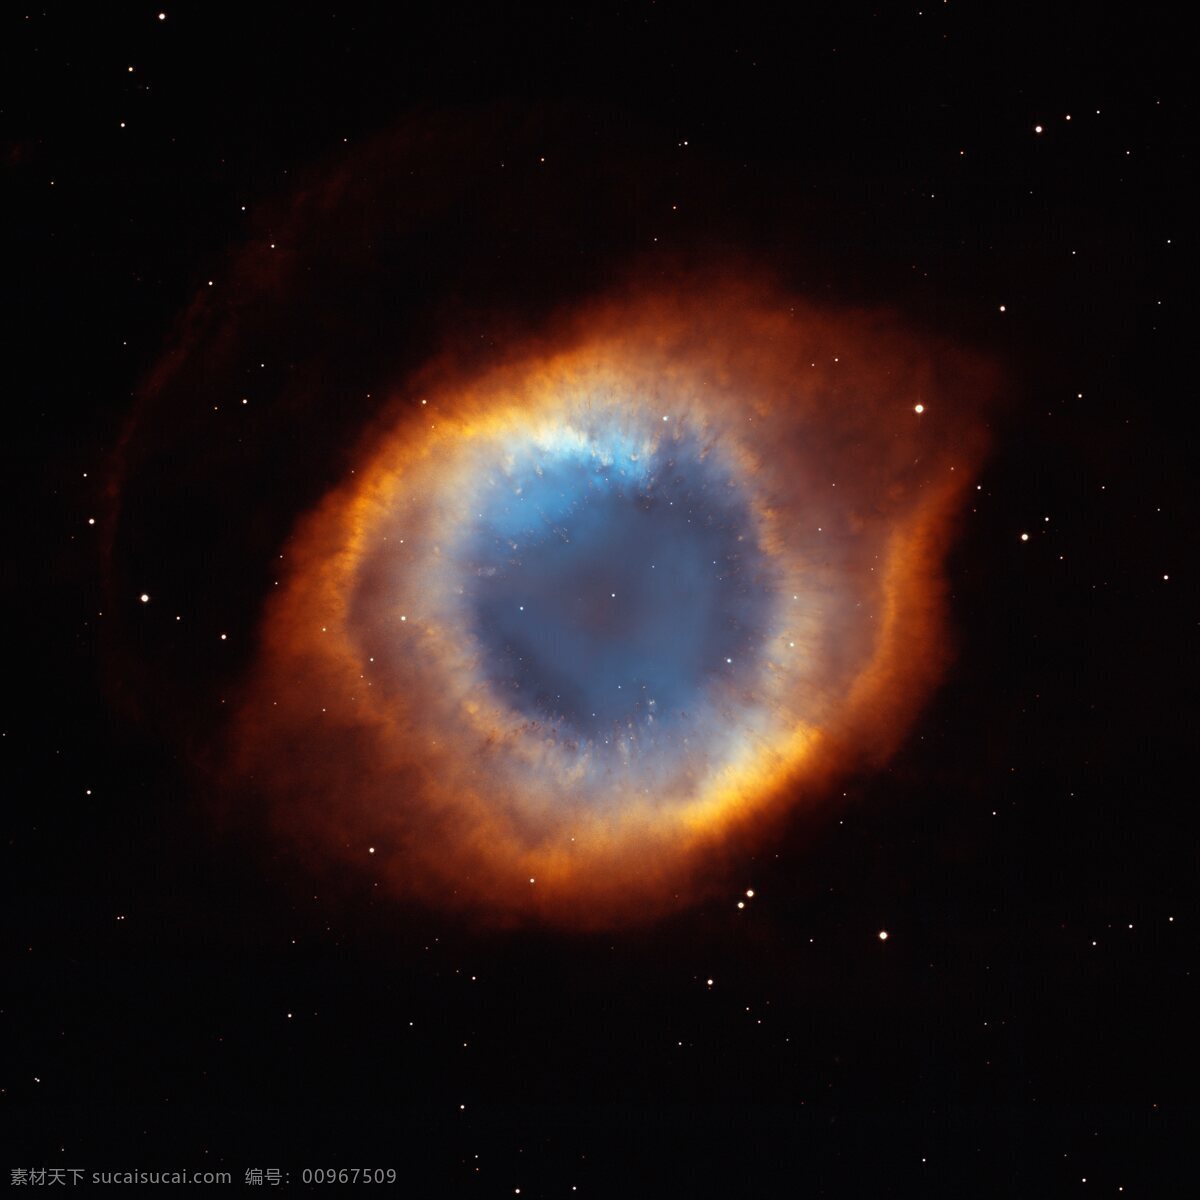 glory 科学研究 现代科技 星云光环 iridescent 哈博 望远镜 照片 高清星云照片 瞳孔状星云 彩色星云照片 1600021516000px 矢量图